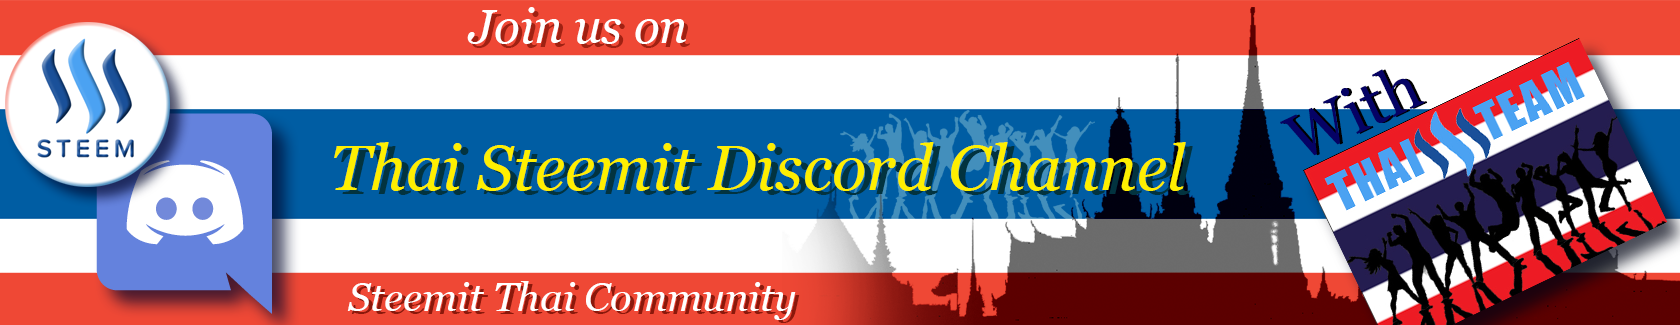 Banner Thai Discord.png